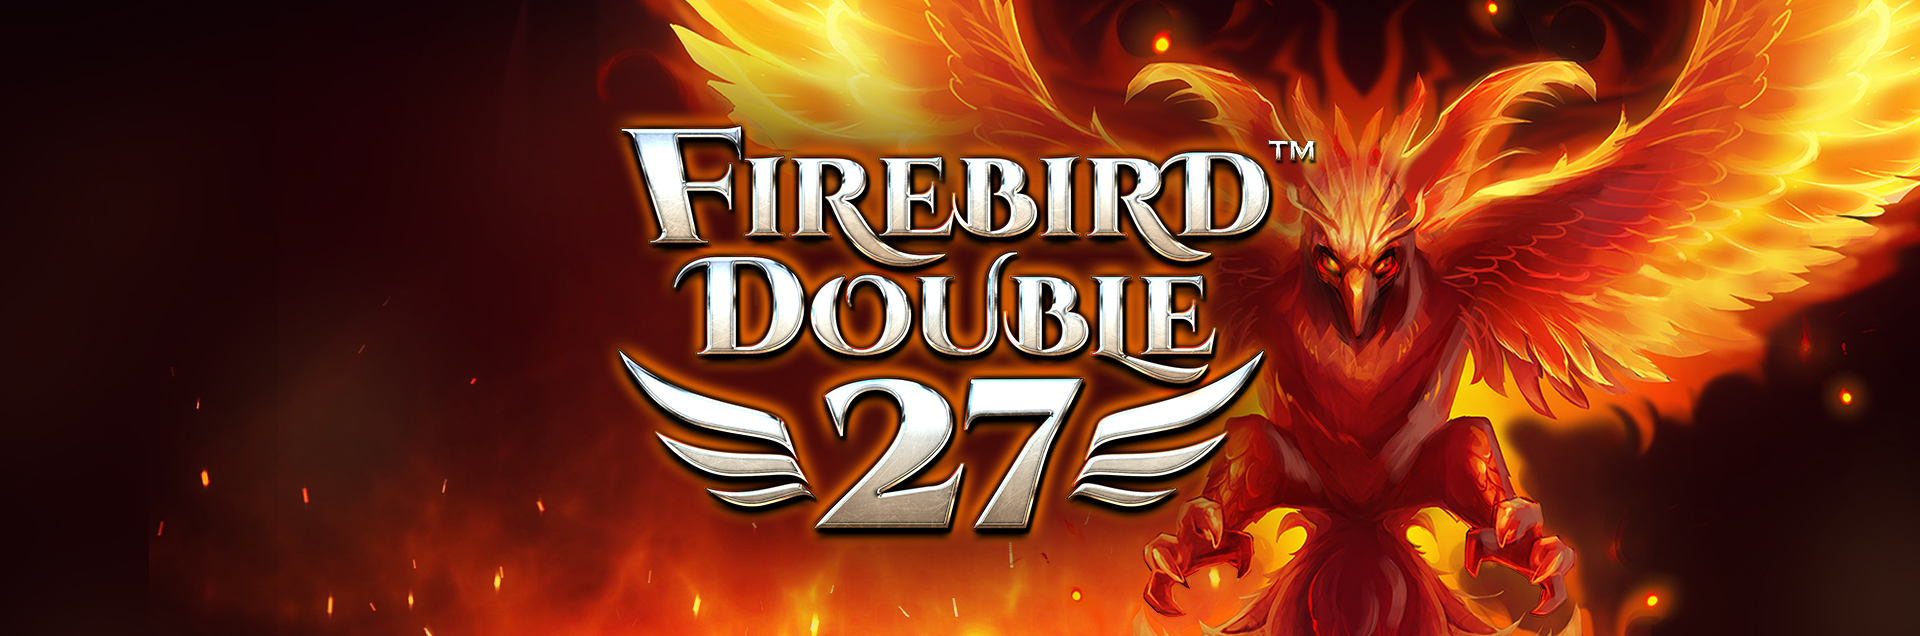 Firebird Double27 header image games